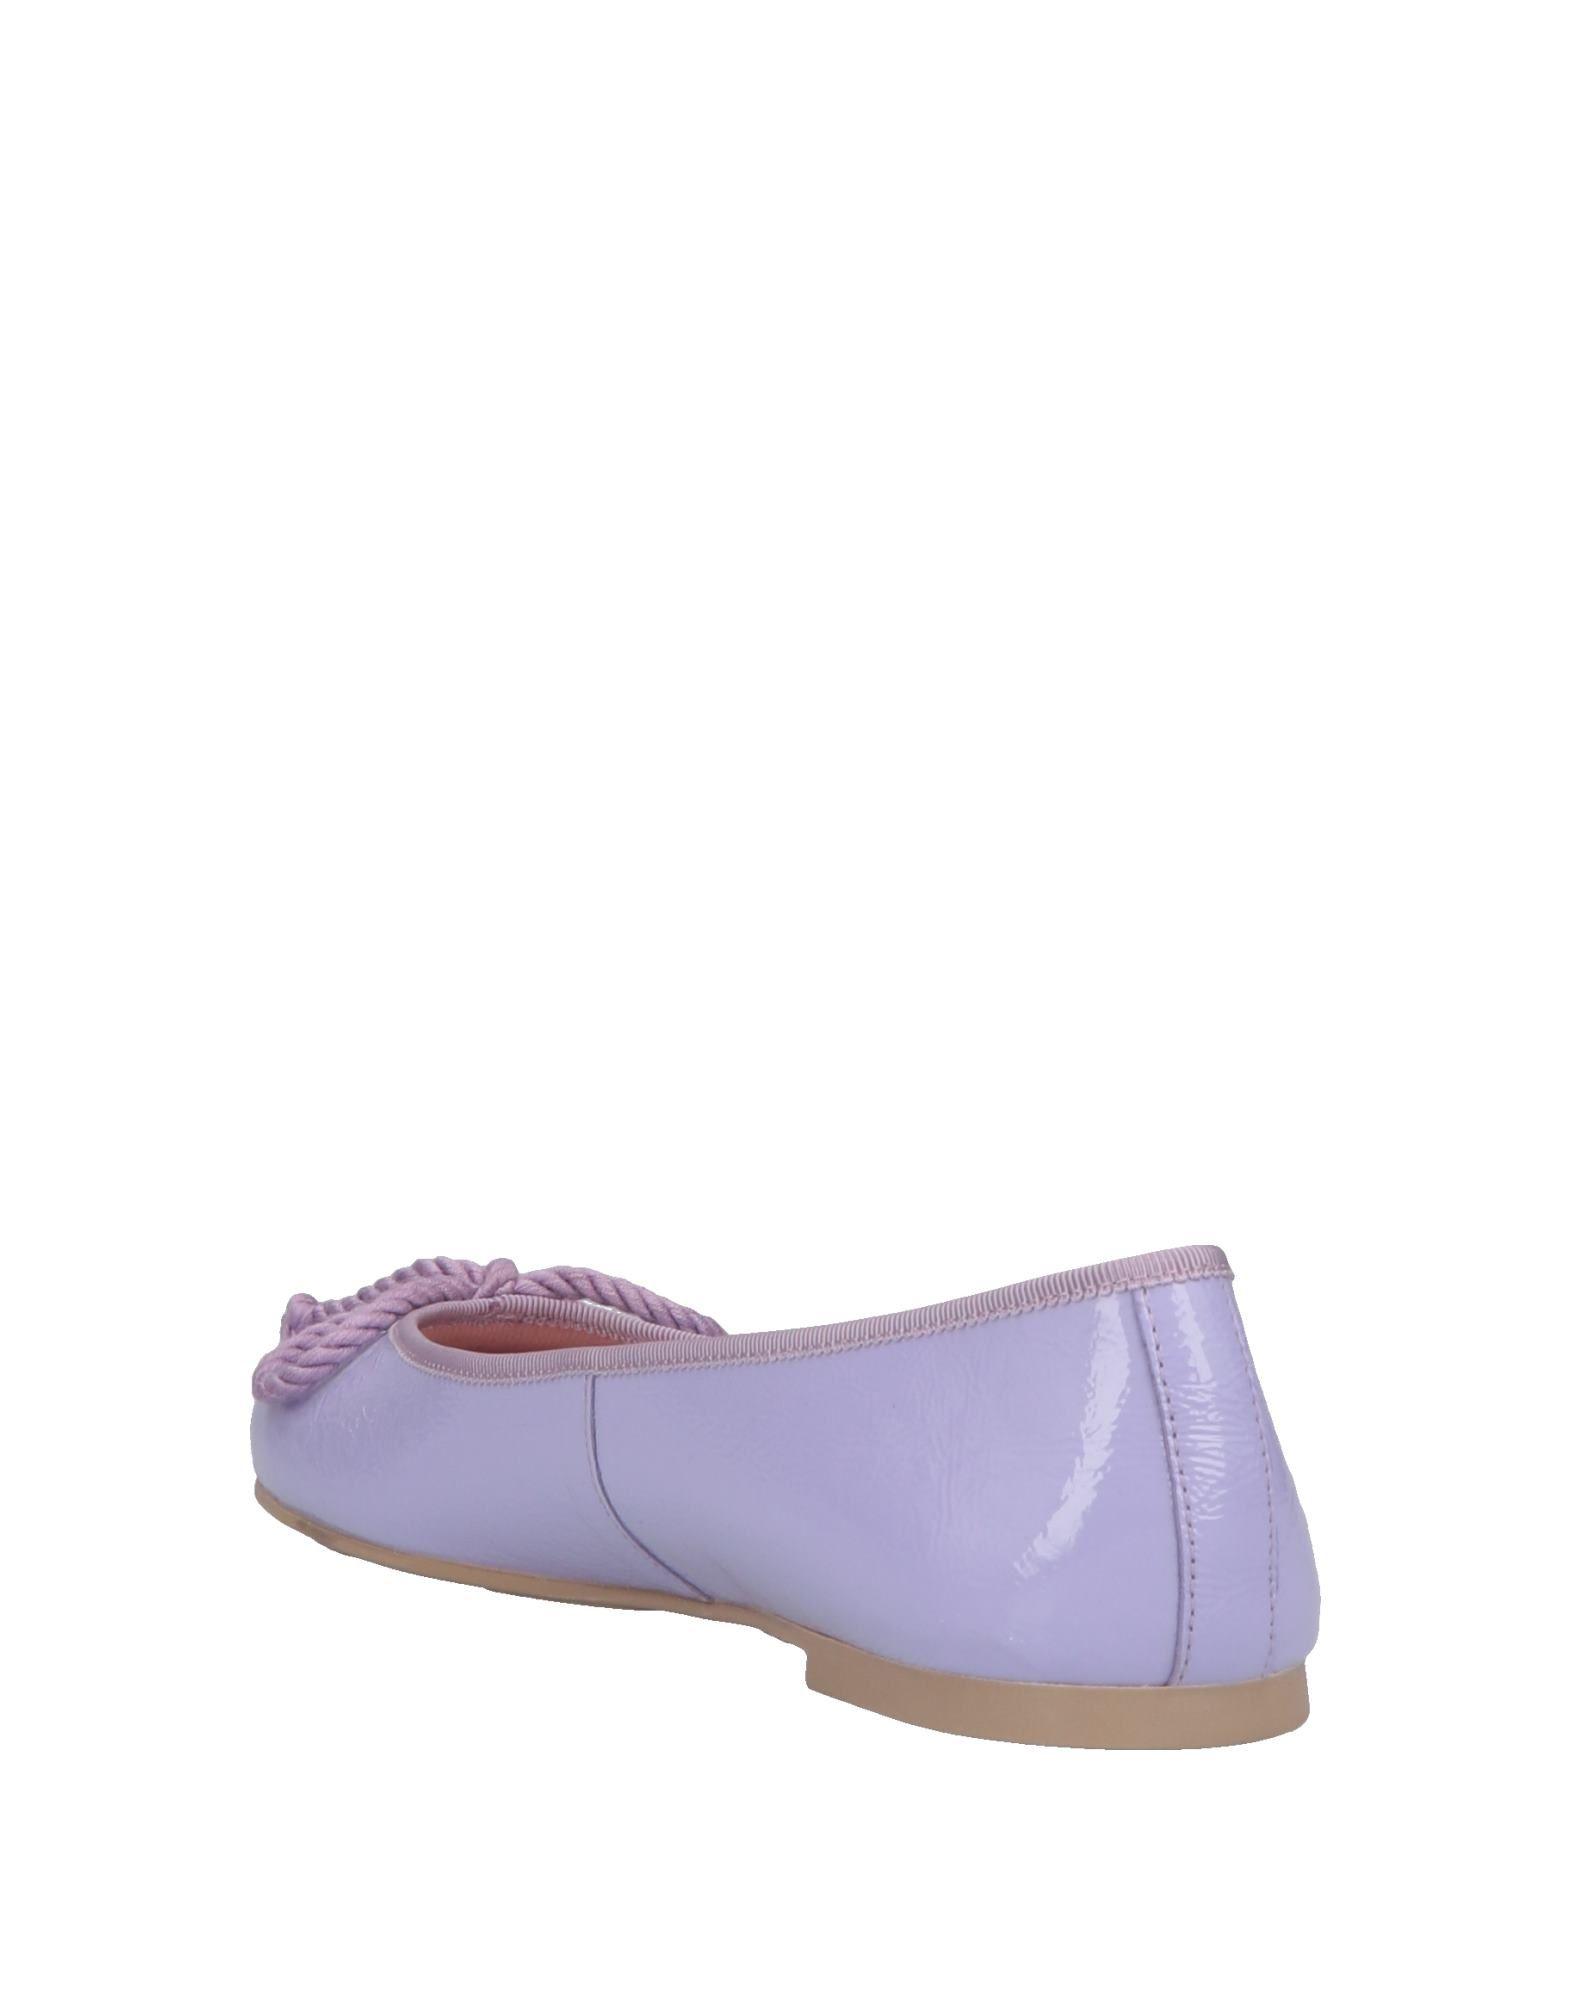 Pretty Ballerinas Rubber Ballet Flats in Lilac (Purple) - Lyst